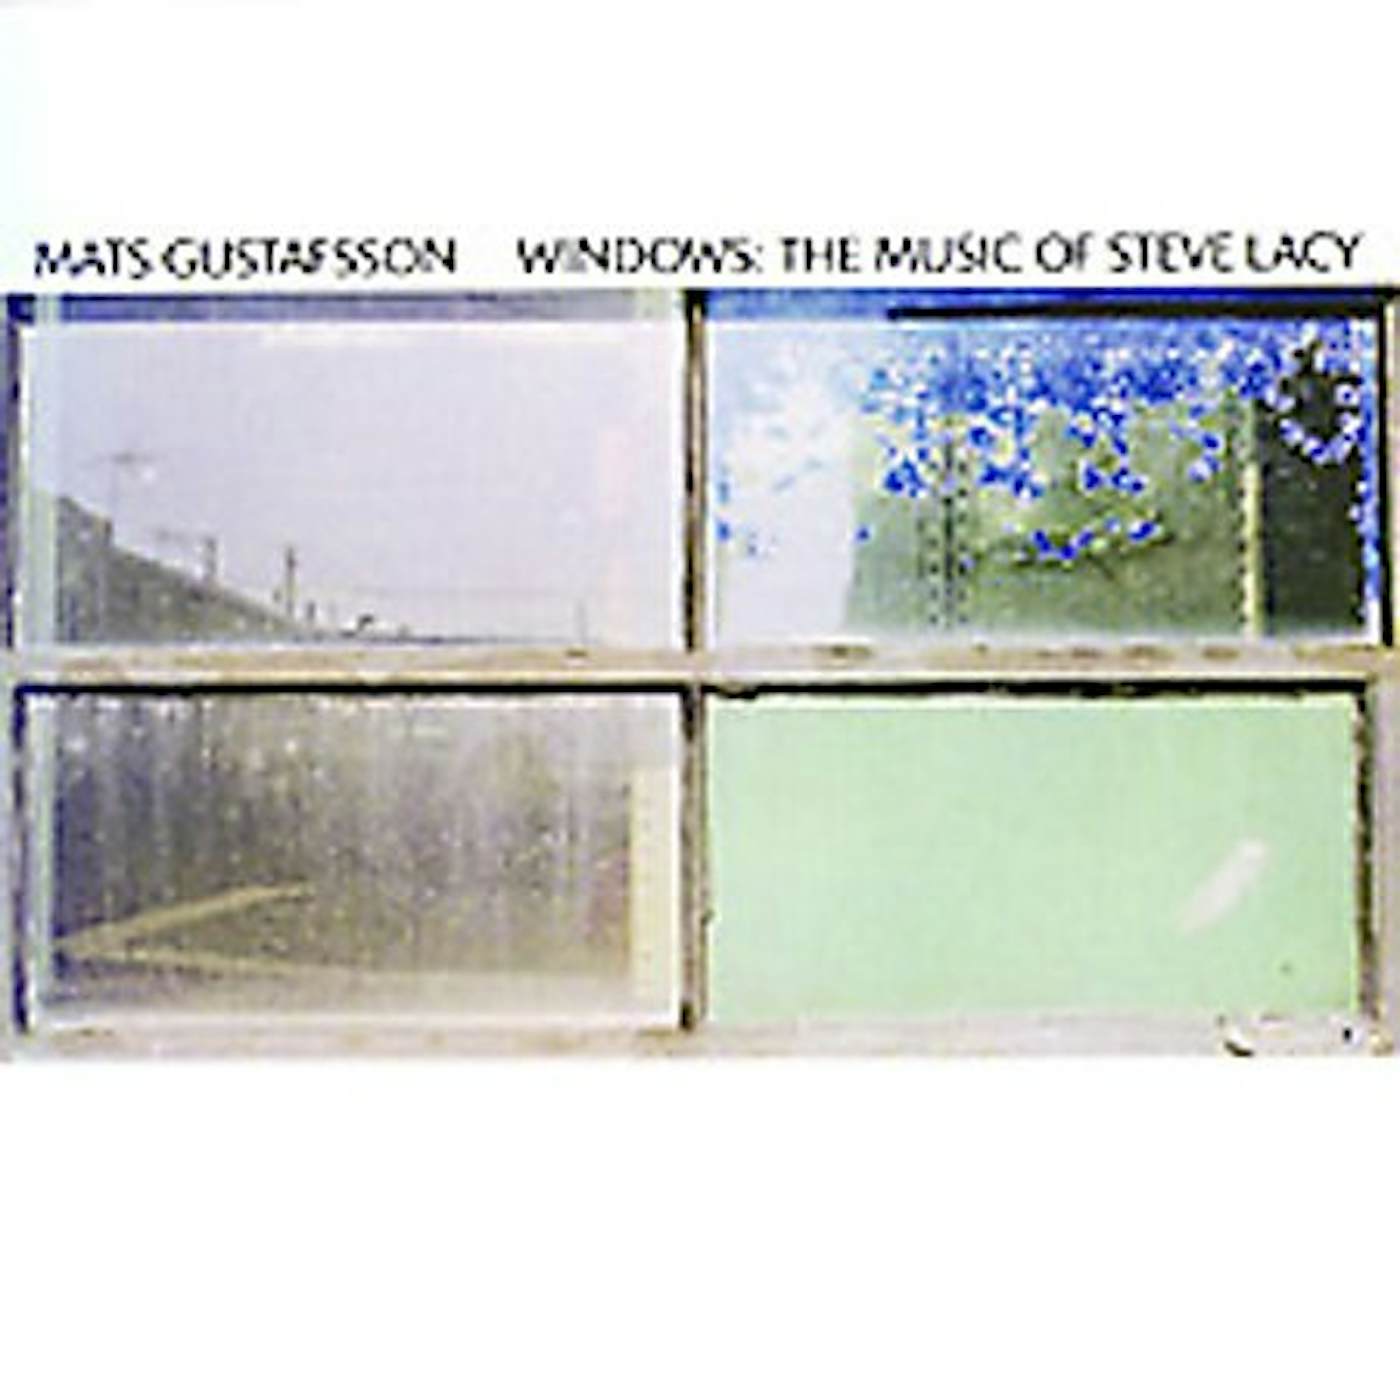 Mats Gustafsson WINDOWS: THE MUSIC OF STEVE LACY CD